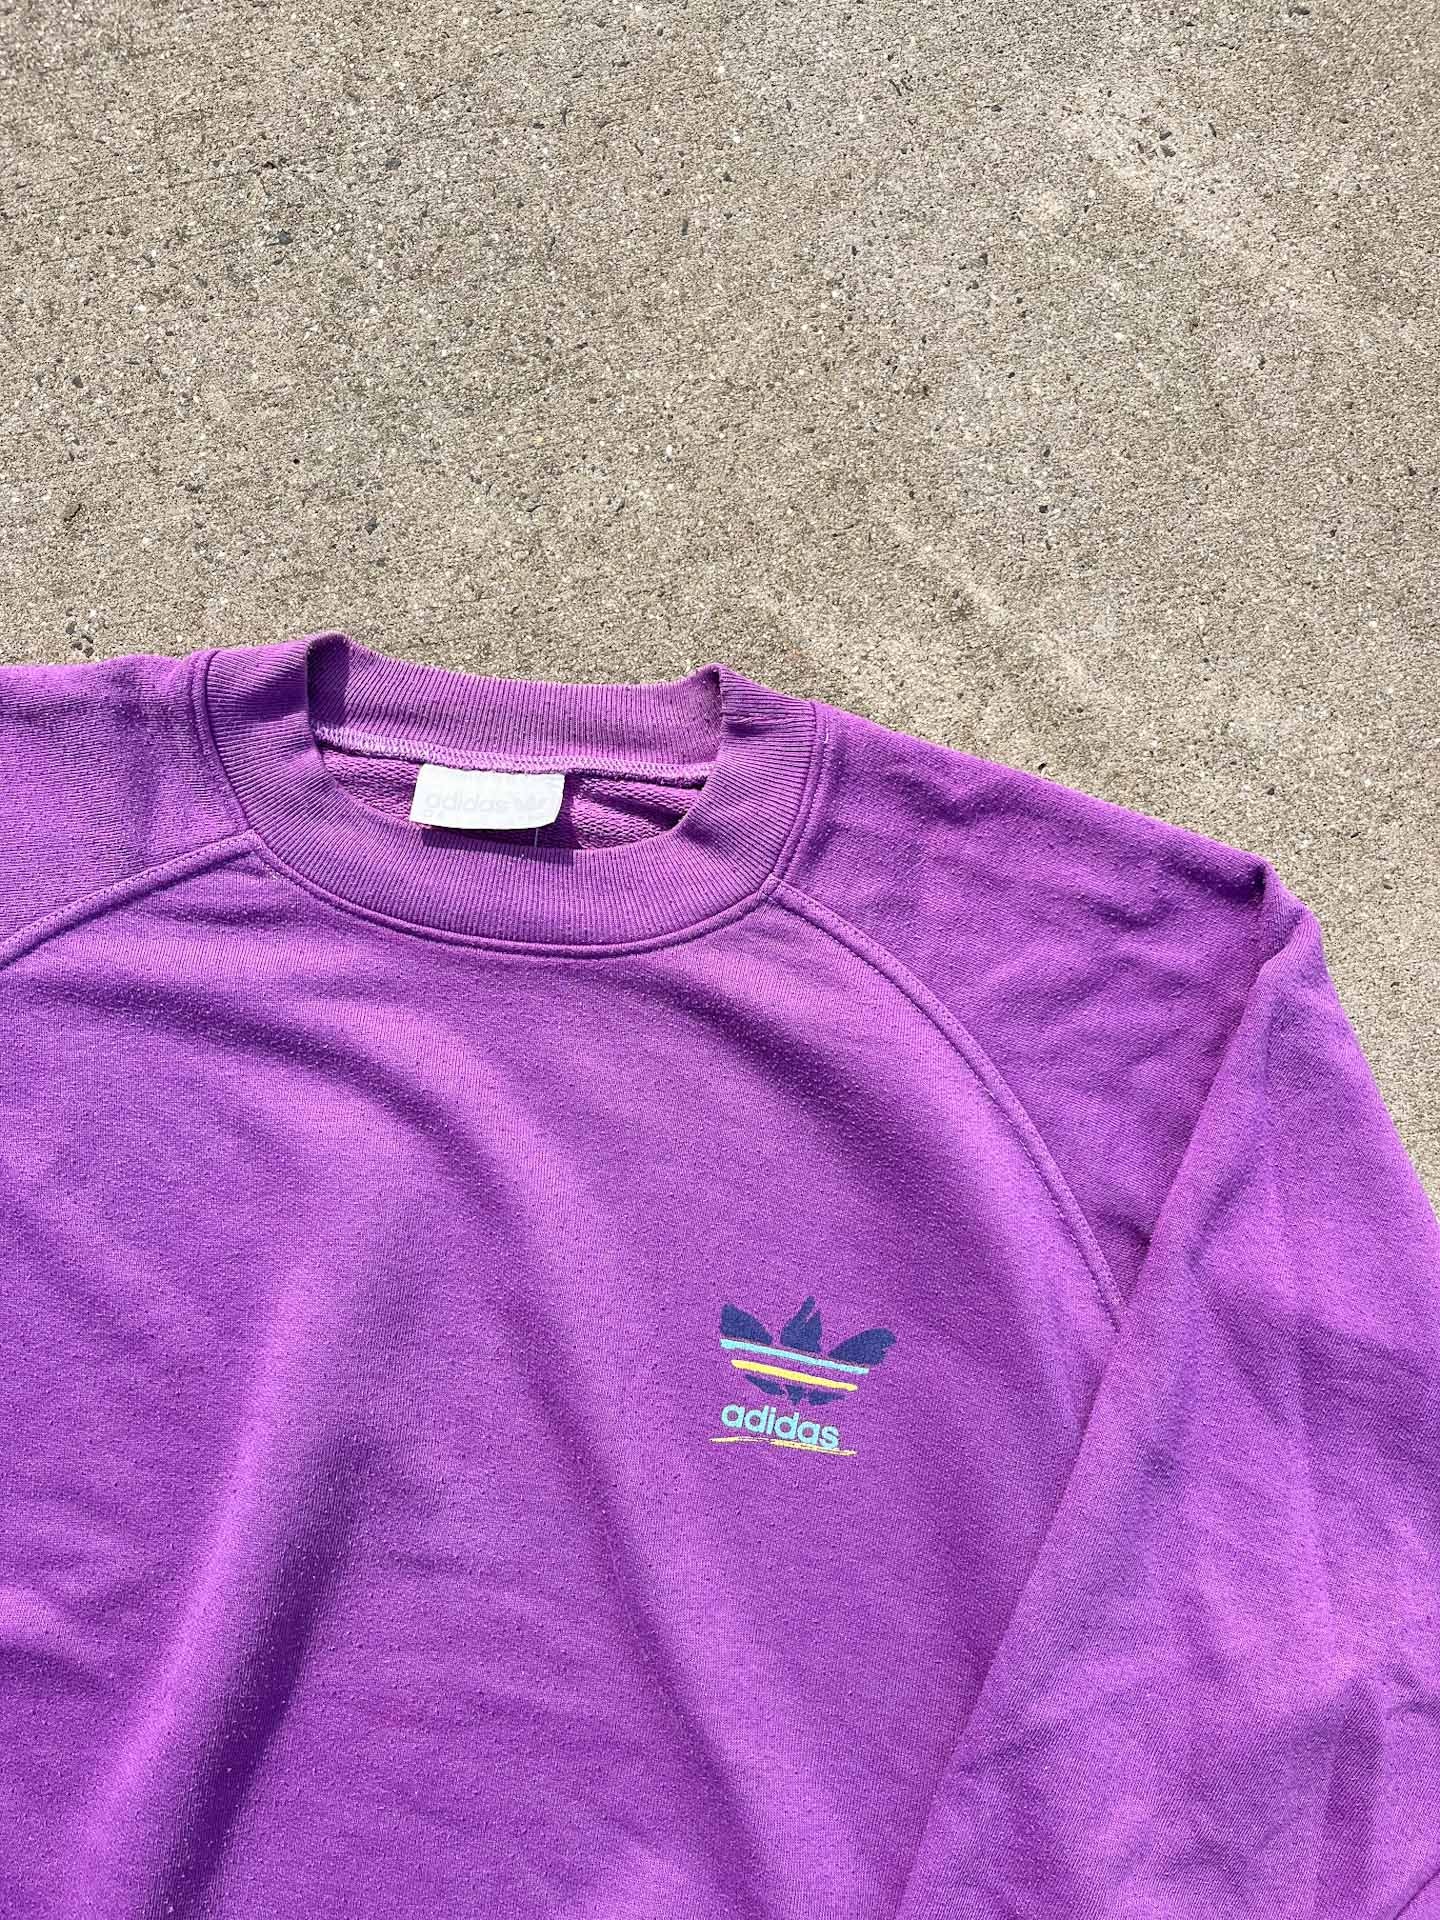 Adidas 80s purple